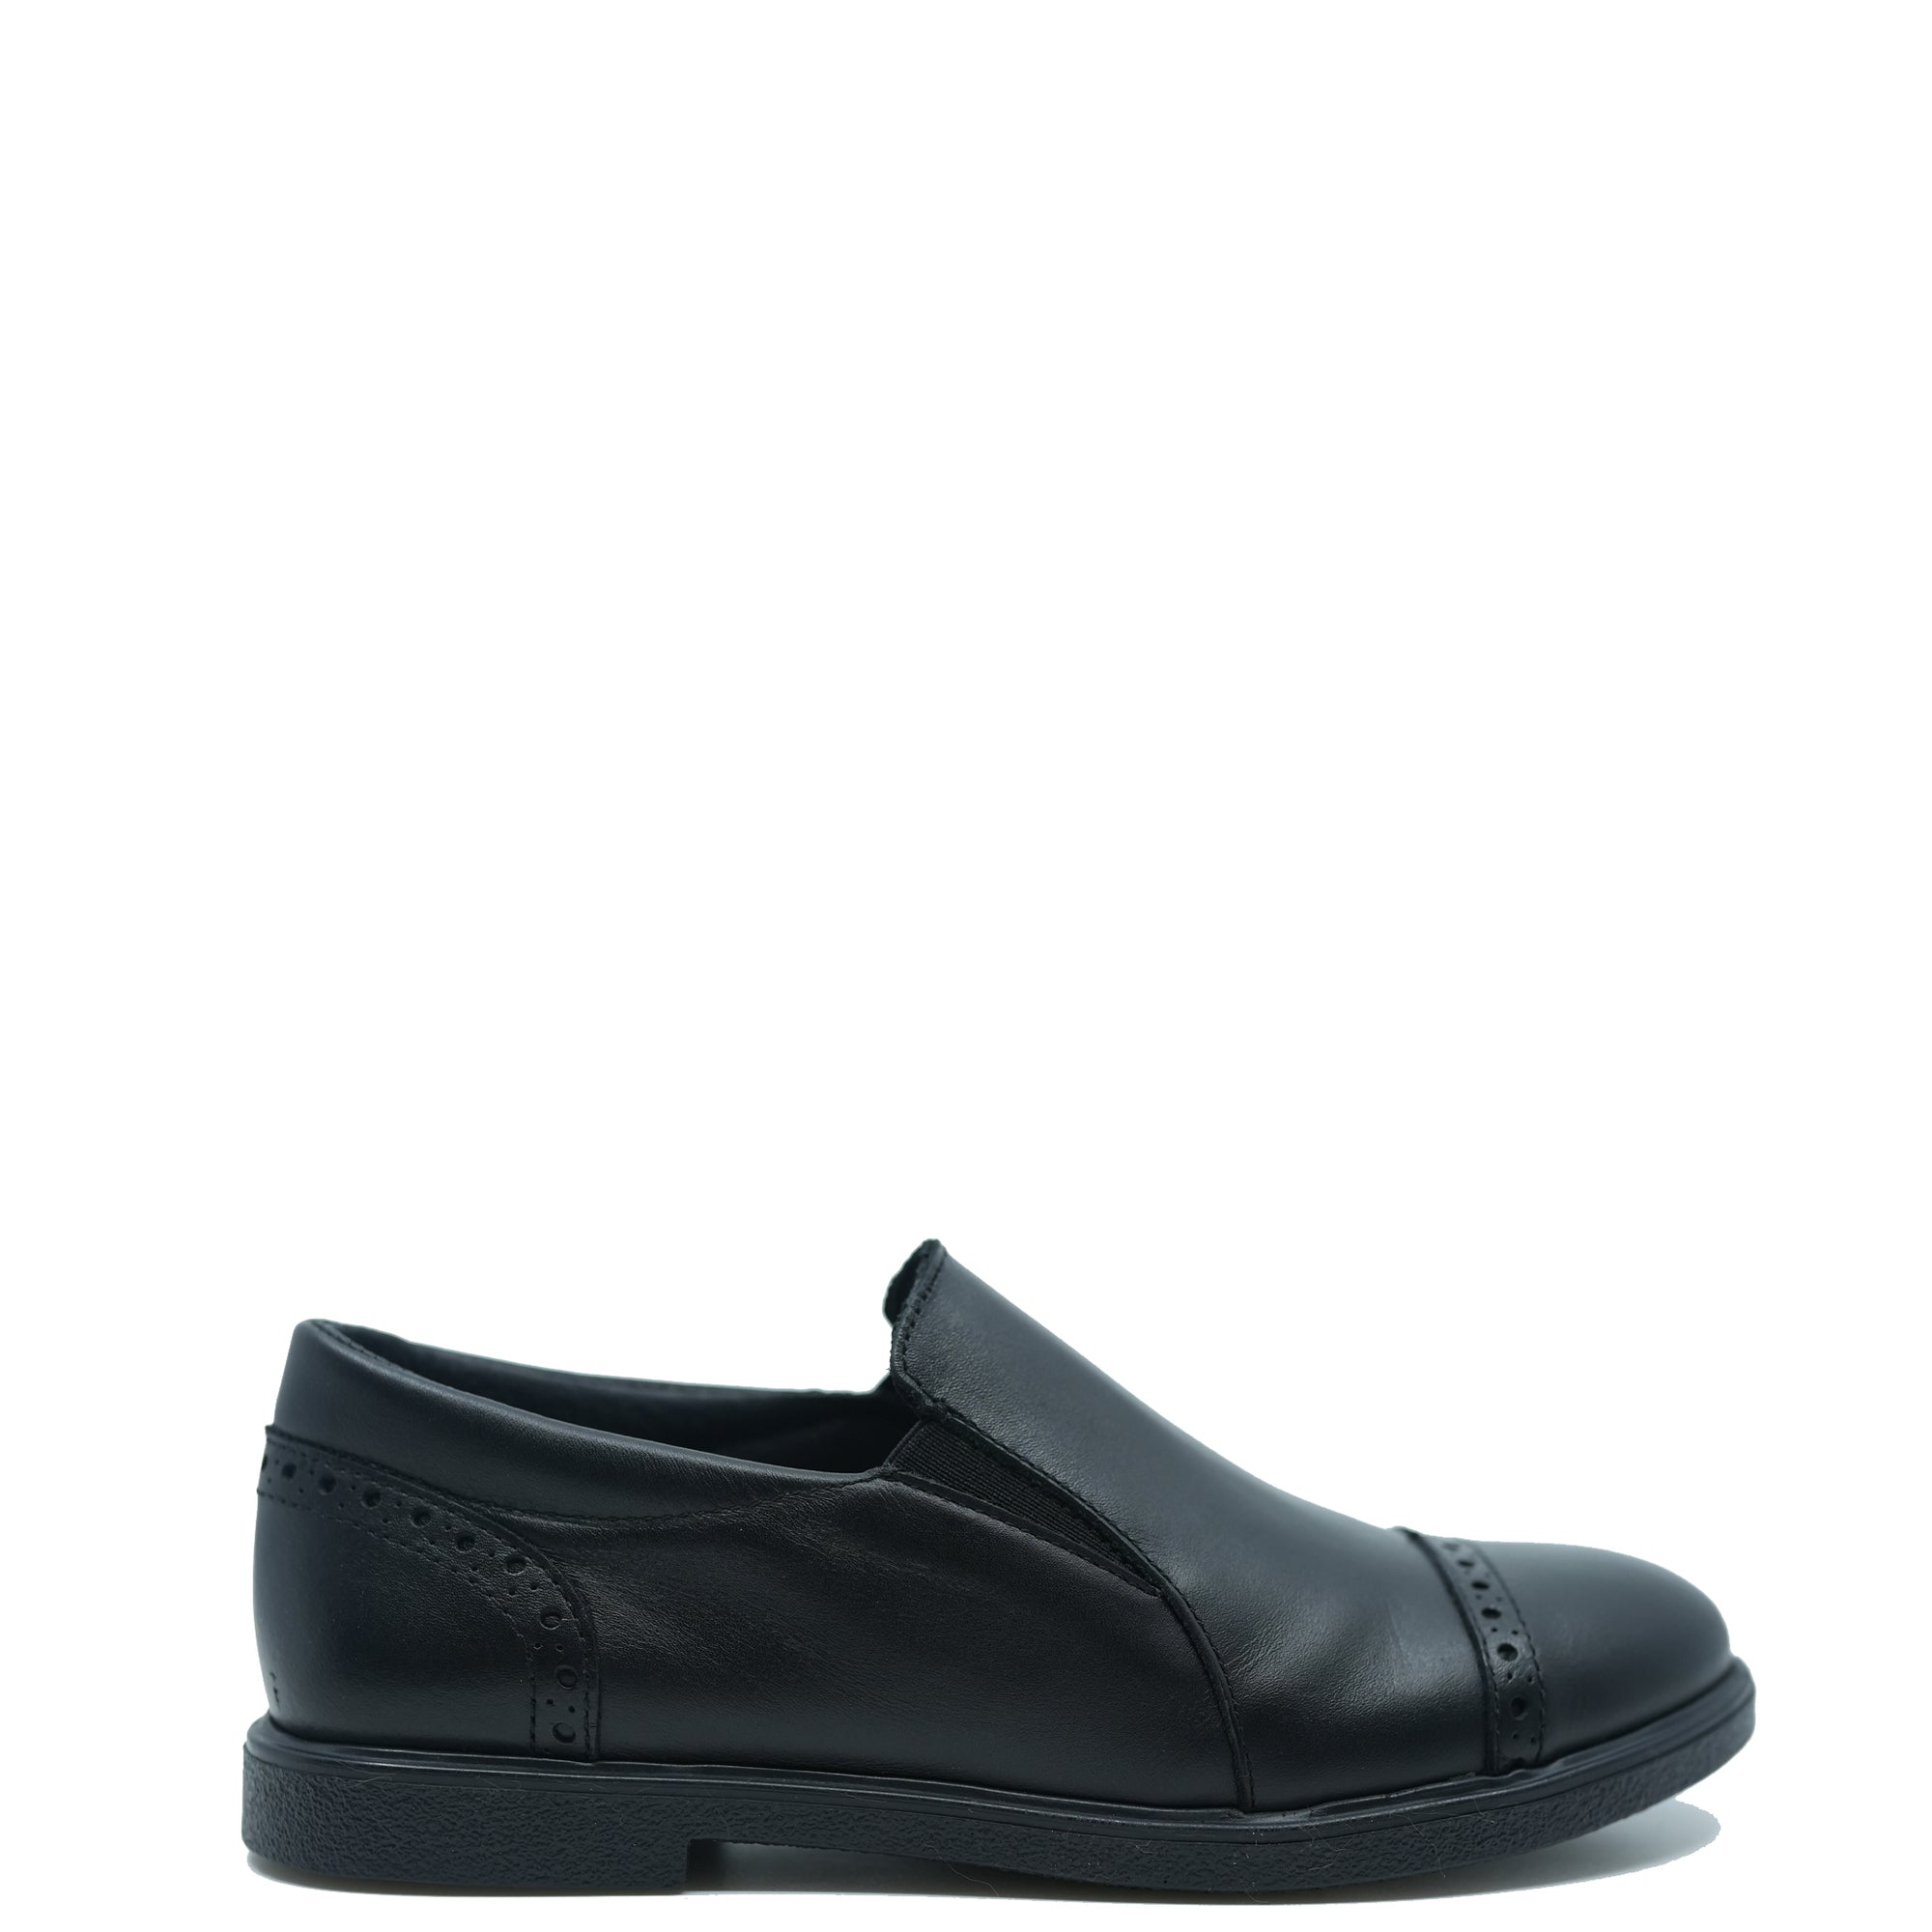 Blublonc Black Leather Captoe Dress Shoe-Tassel Children Shoes